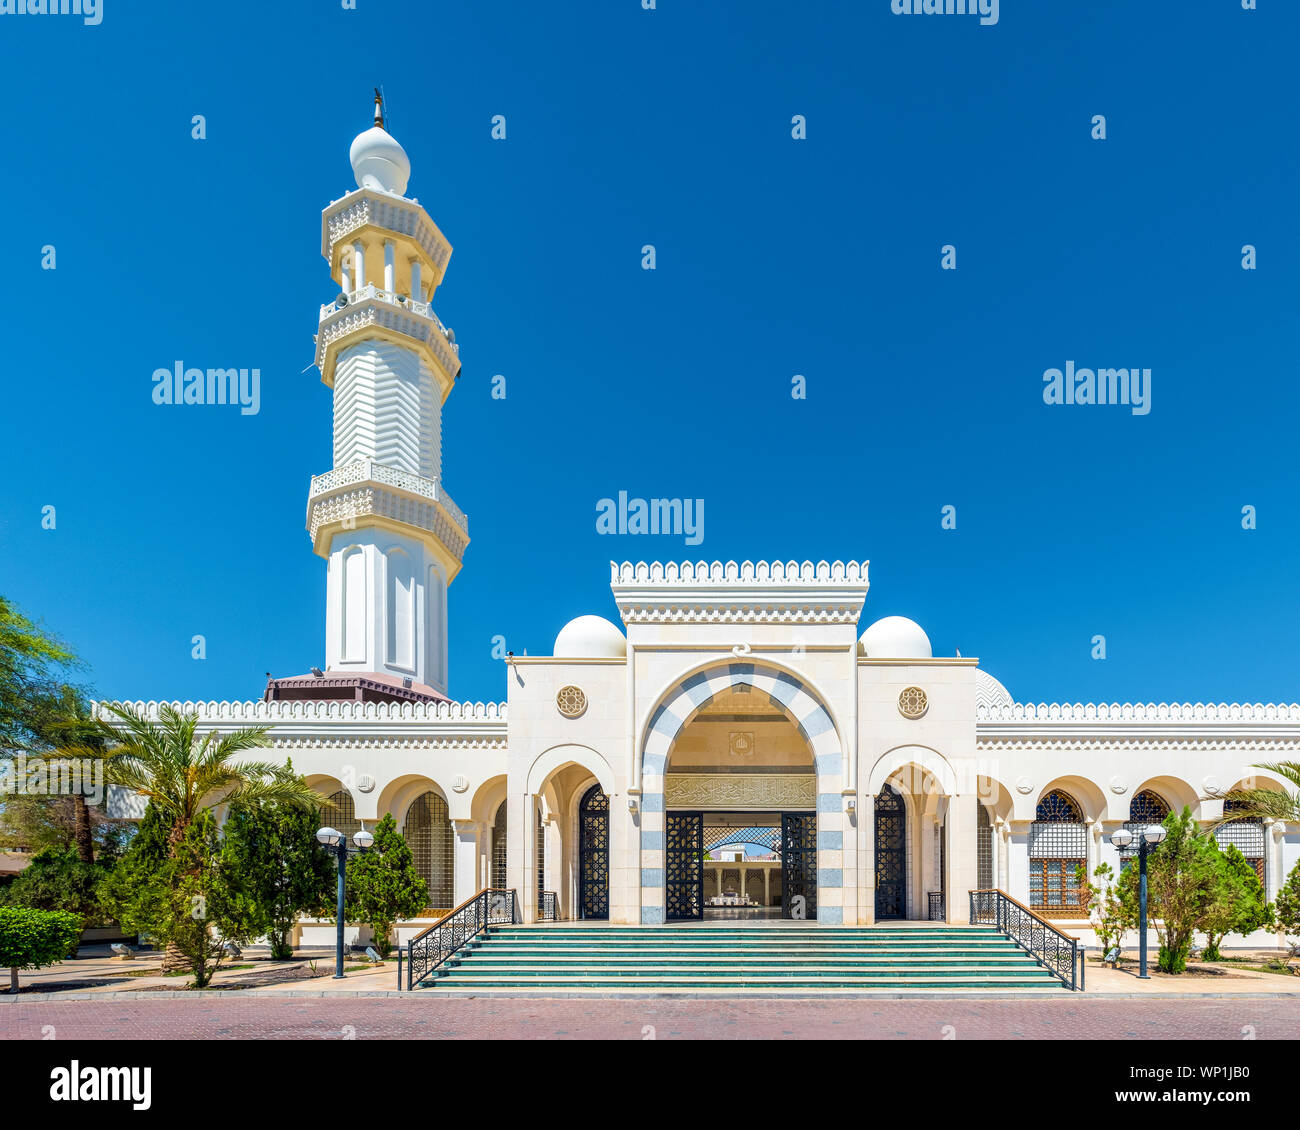 Jordan, Aqaba Governorate, Aqaba. Sharif Hussein bin Ali Mosque. Stock Photo